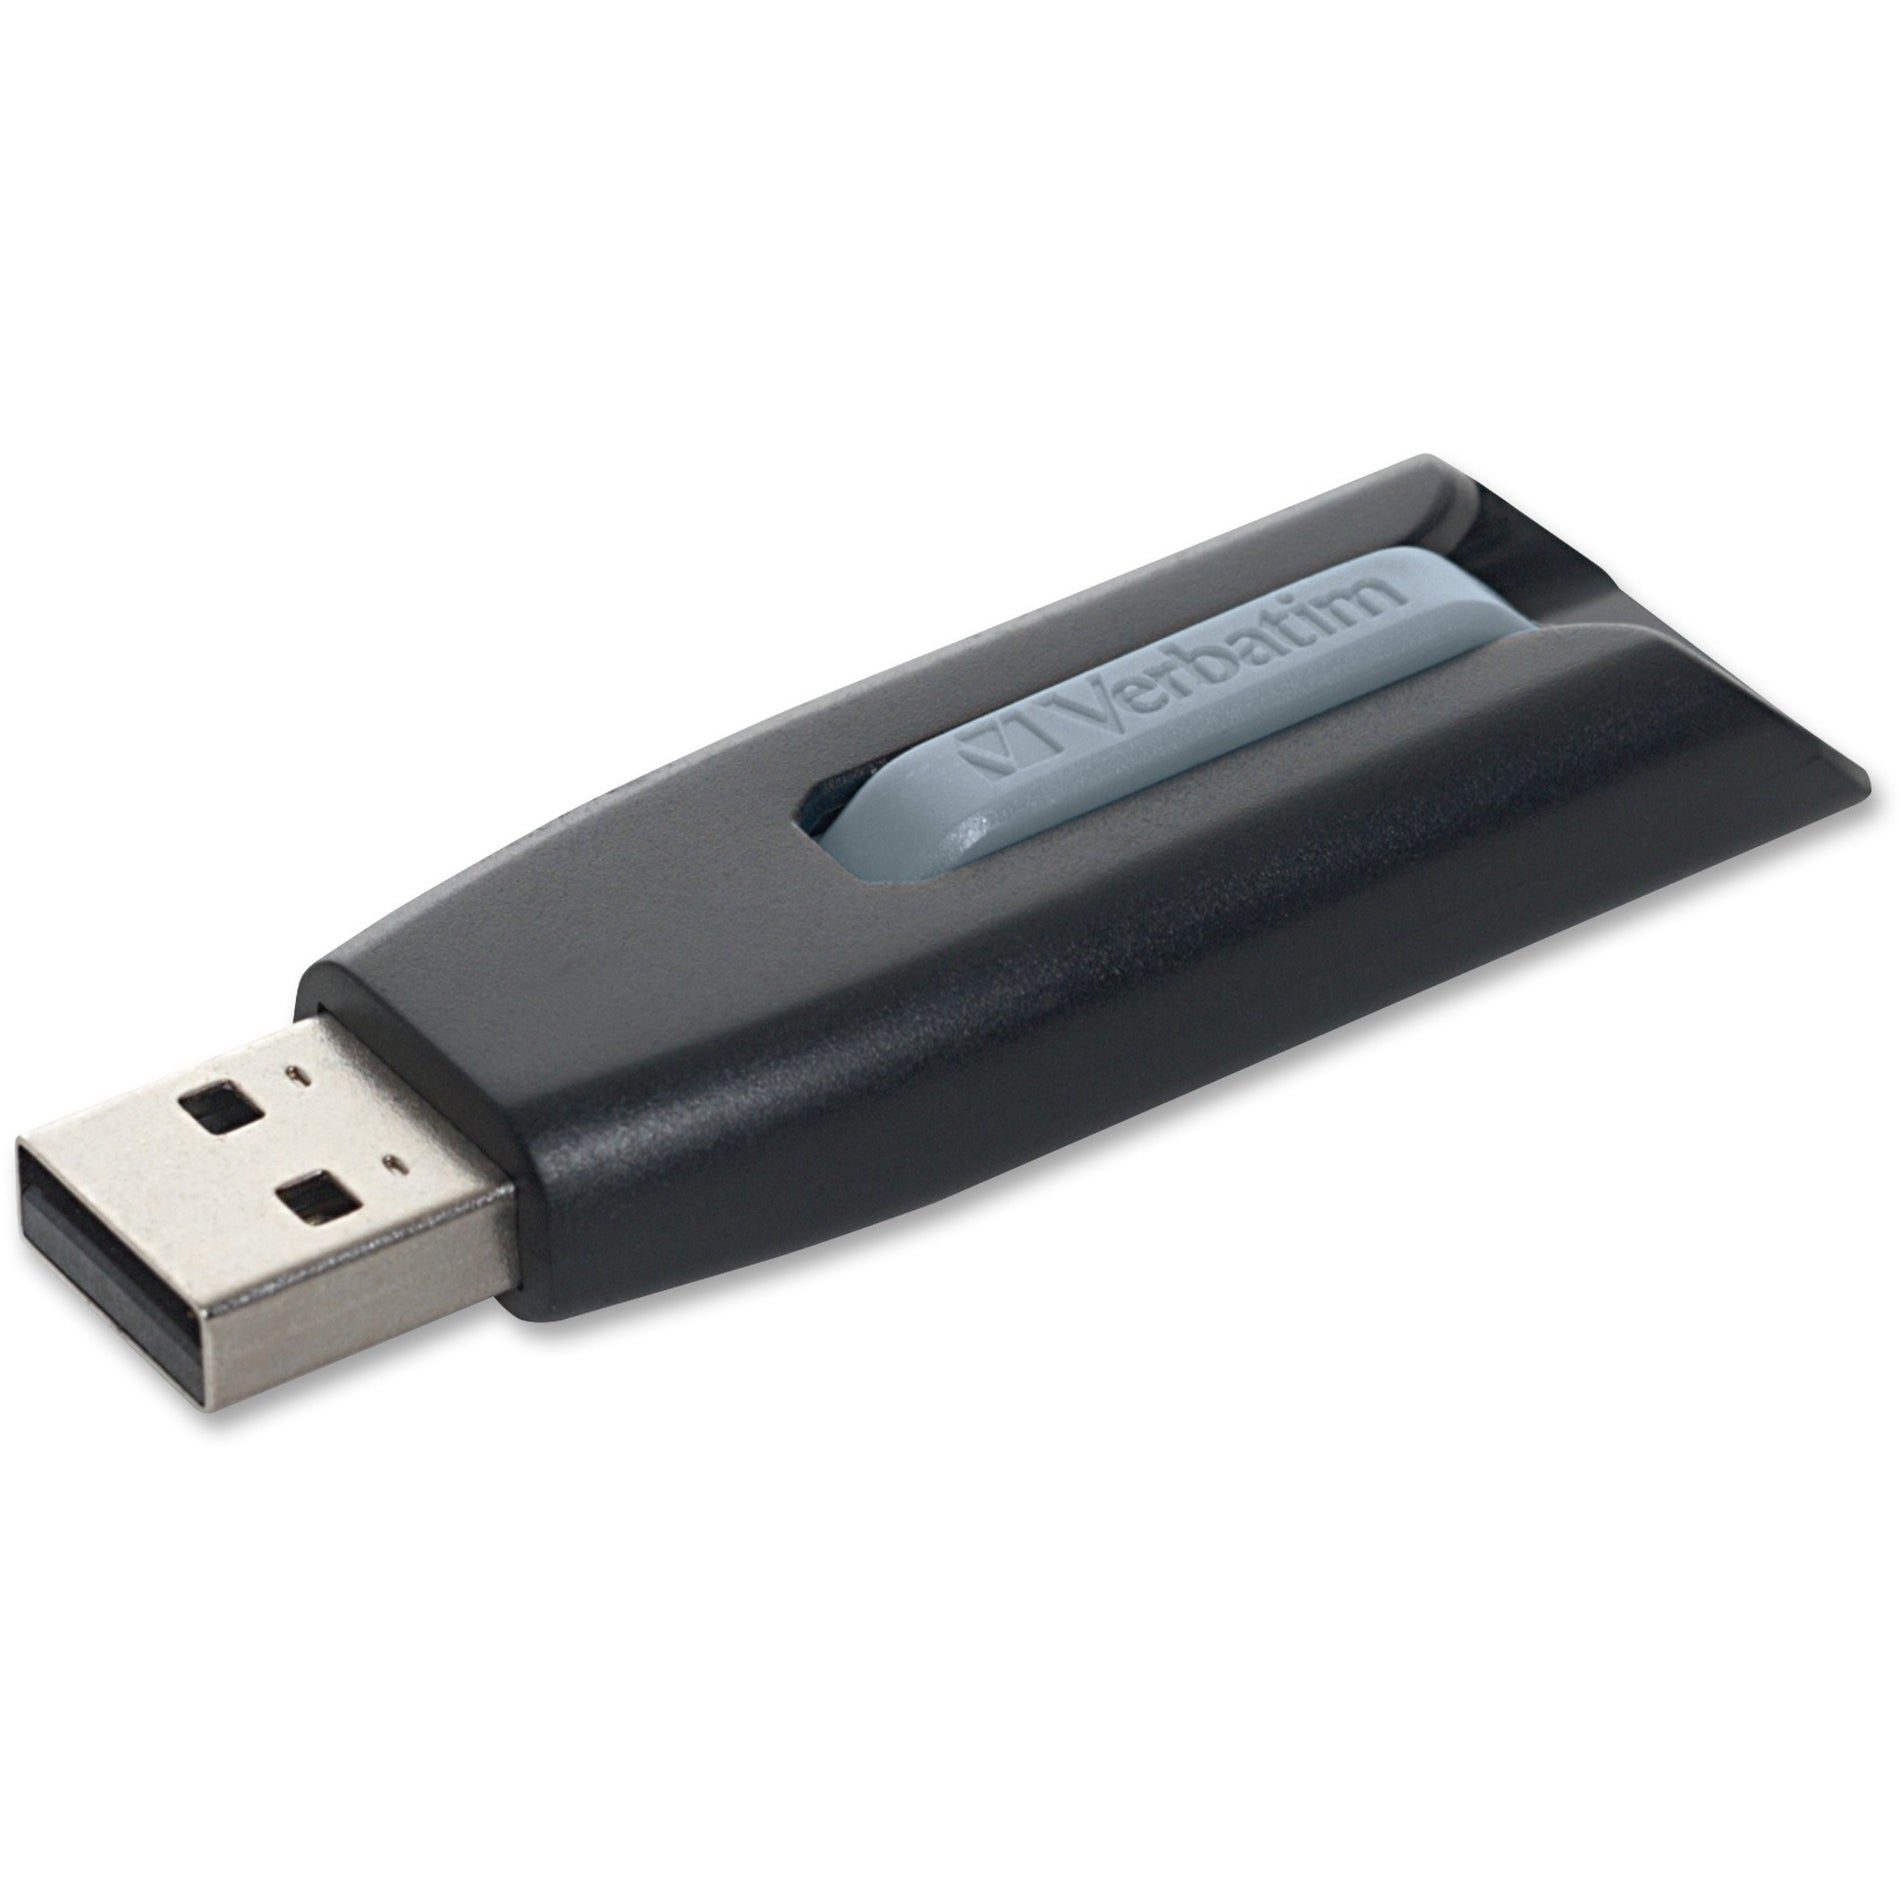 Microban 49173 Store 'n' Go V3 USB-Laufwerk 32GB Grau